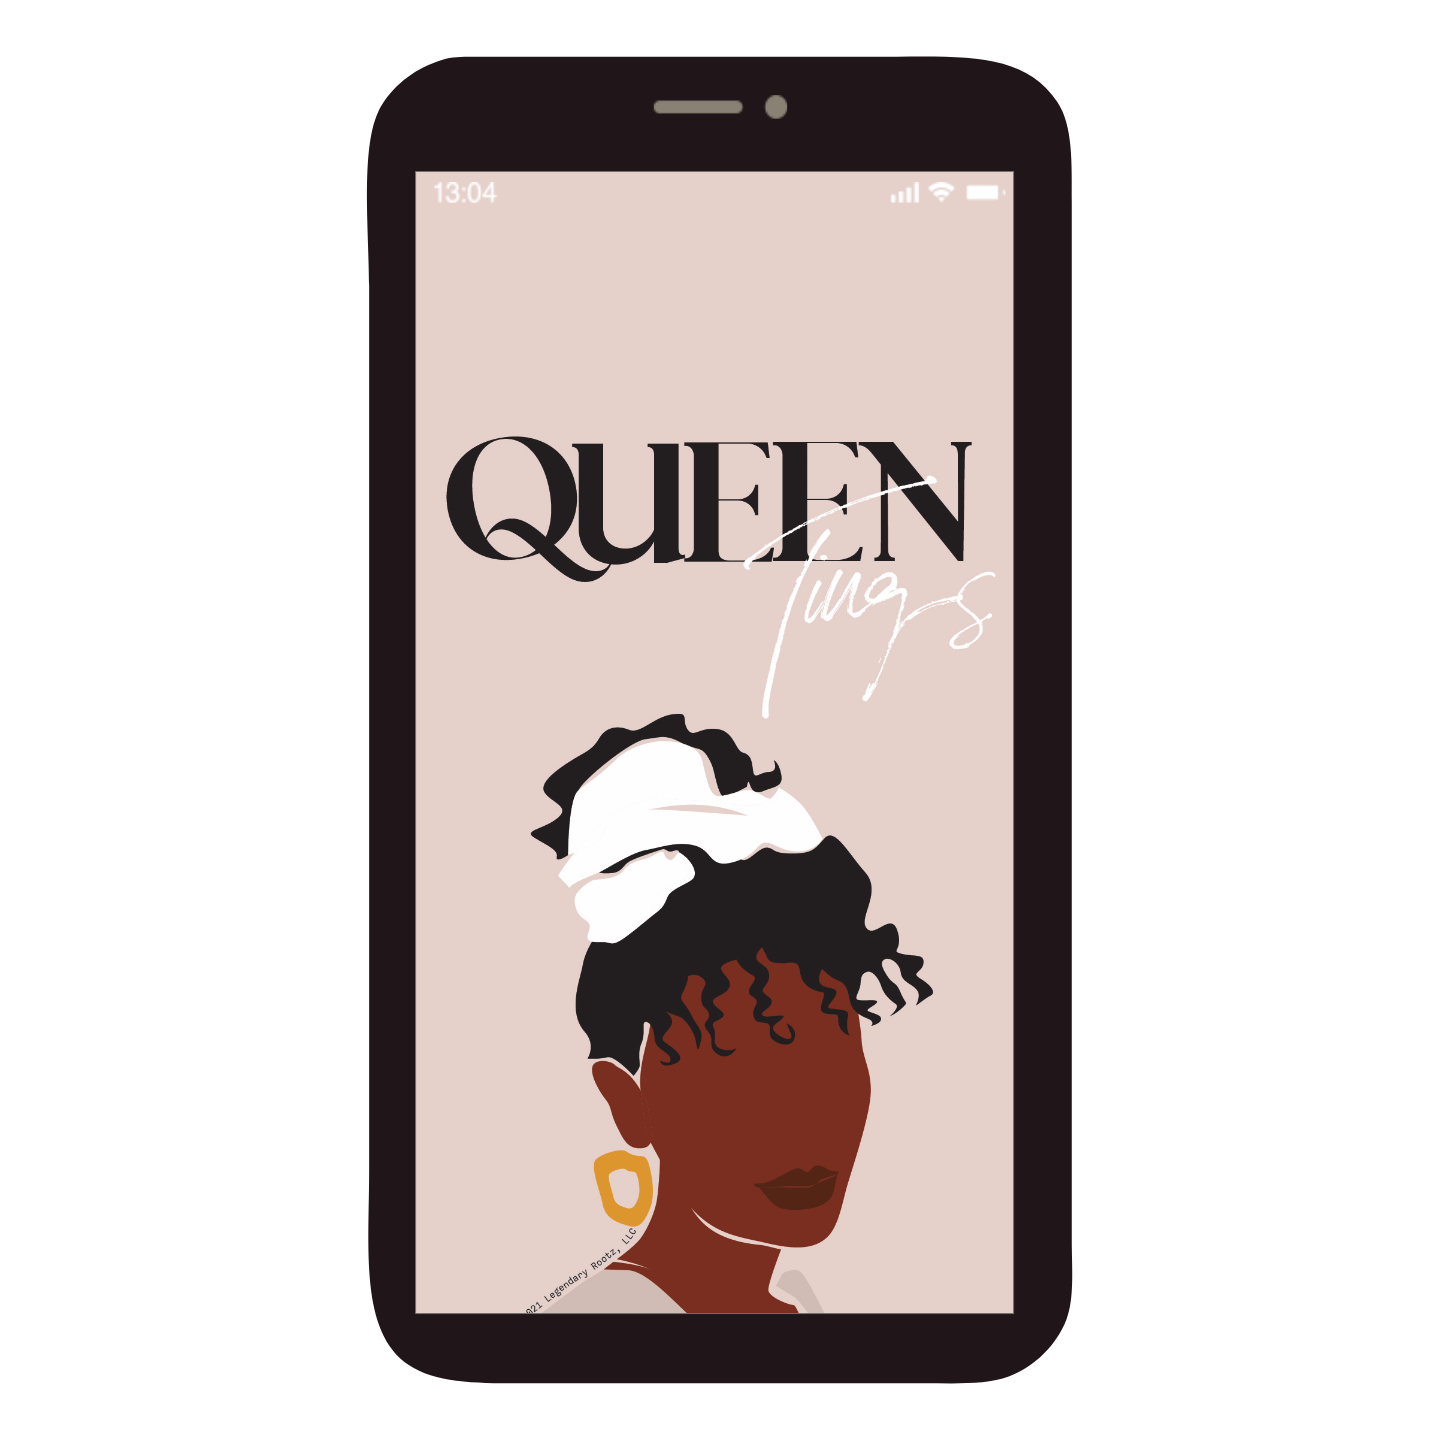 Queen Tings | Wallpaper Pack